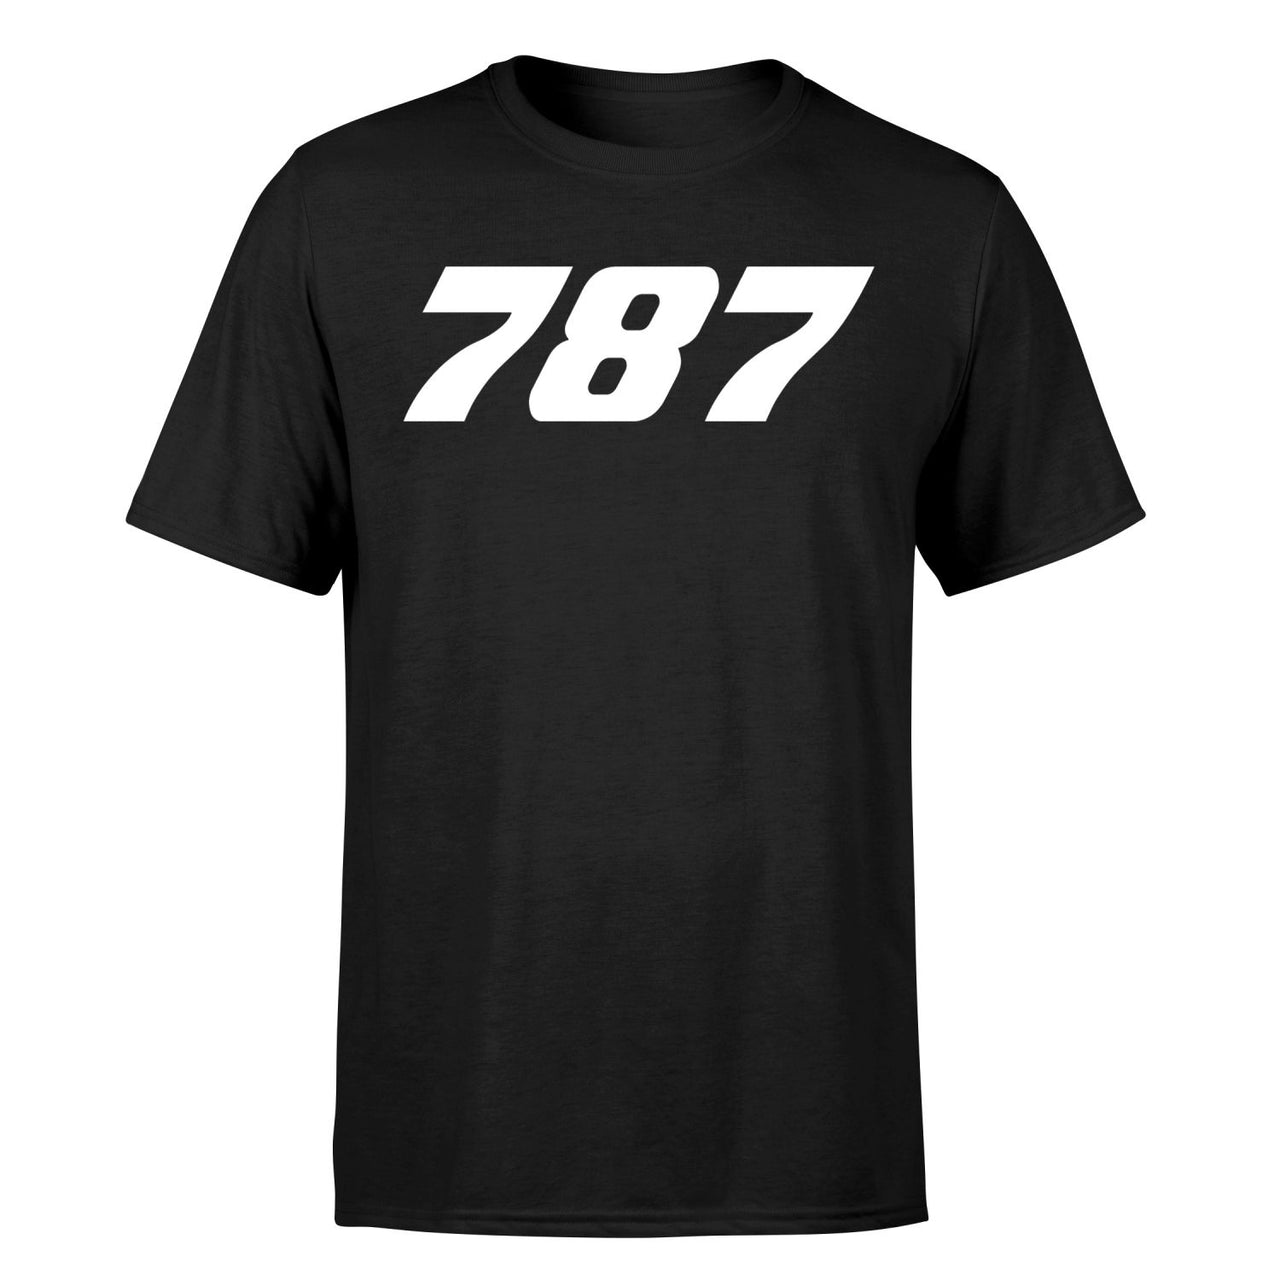 787 Flat Text Designed T-Shirts